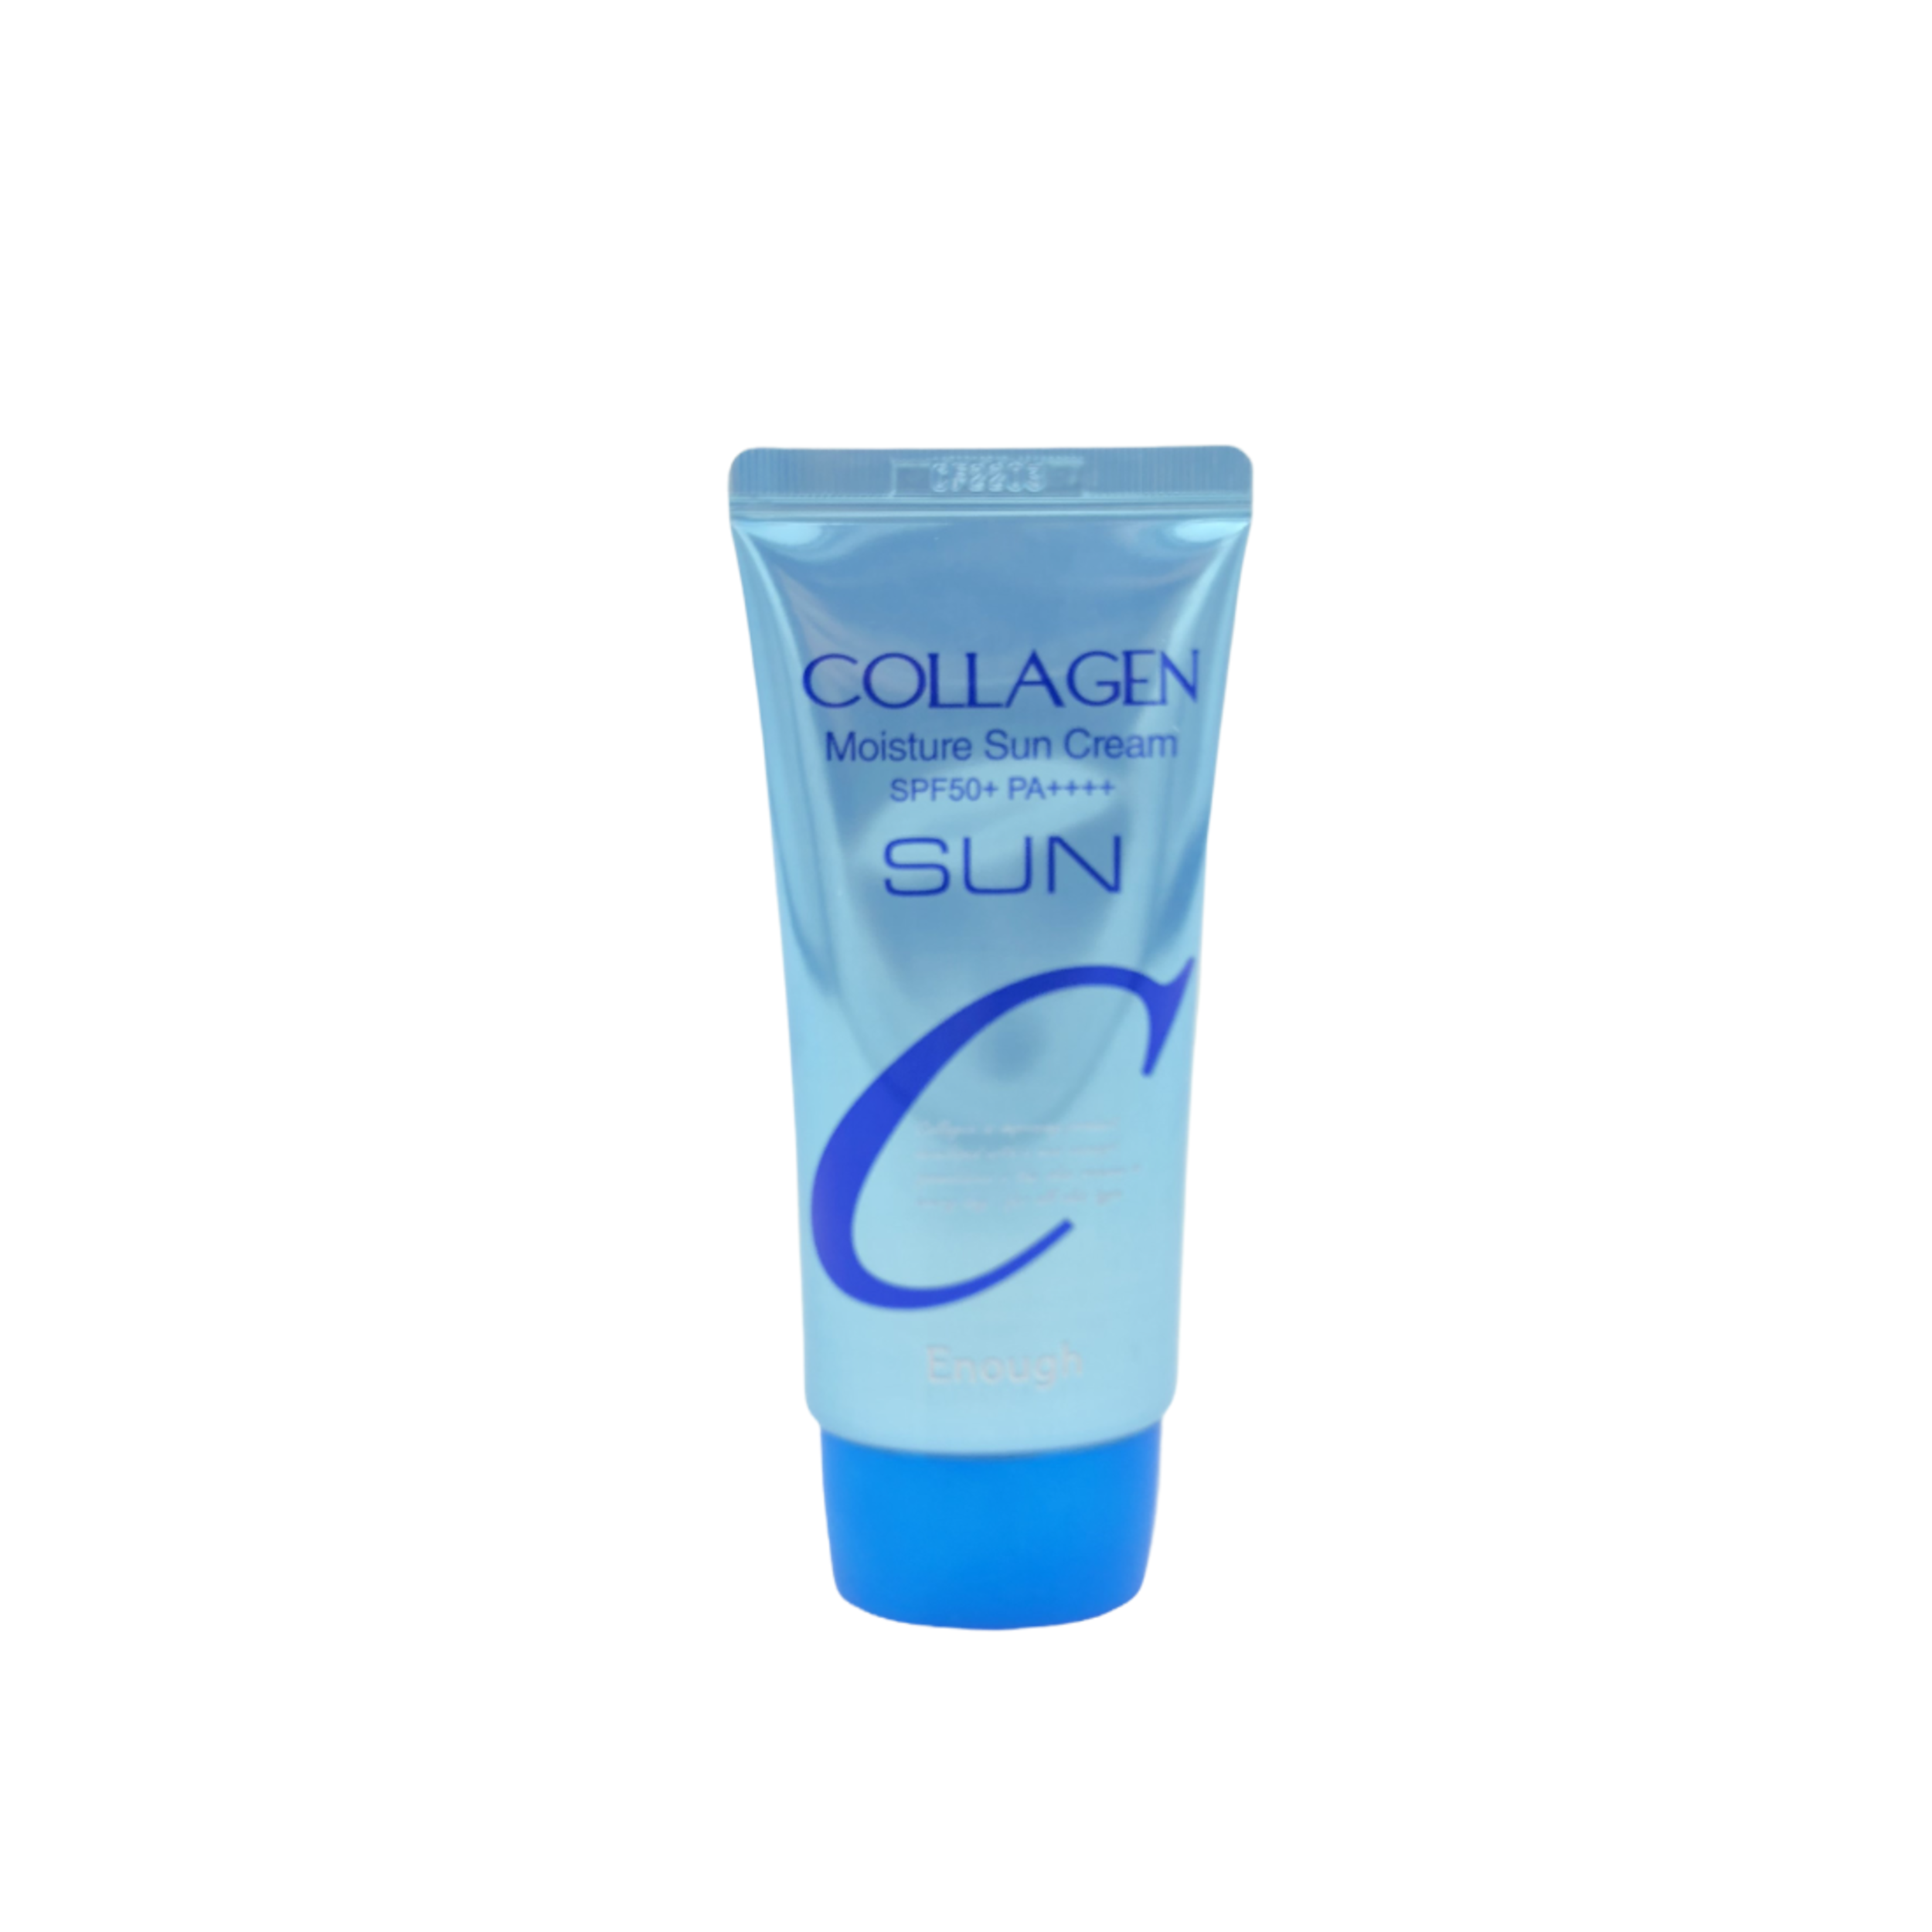 Коллаген sun. Крем солнцезащитный spf50+/pa+++ enough Collagen Moisture Sun Cream. Collagen Sun Cream spf50+ pa+++. Солнцезащитный крем enough Collagen Moisture Sun Cream, 50 мл. Enough Ultra x10 Collagen Pro Sun Cream солнцезащитный крем коллаген.